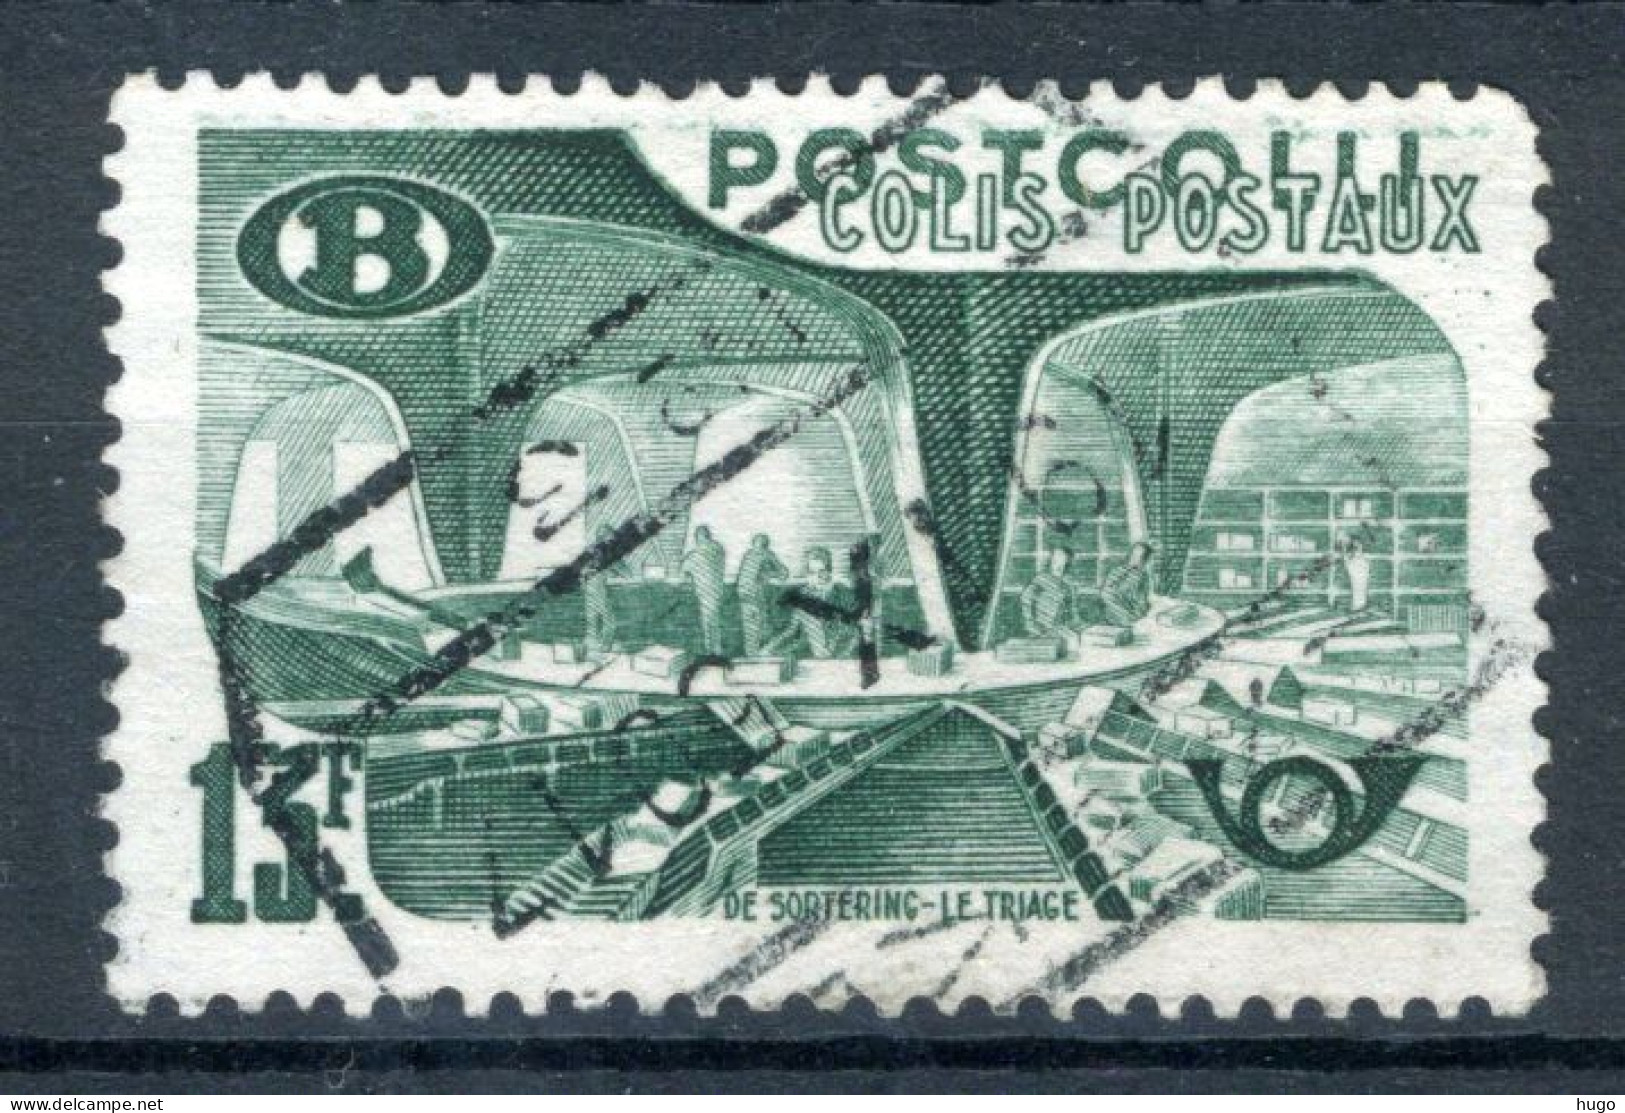 (B) TR324 Gestempeld 1950 - Postpakketzegels Hellogravure - 3 - Used